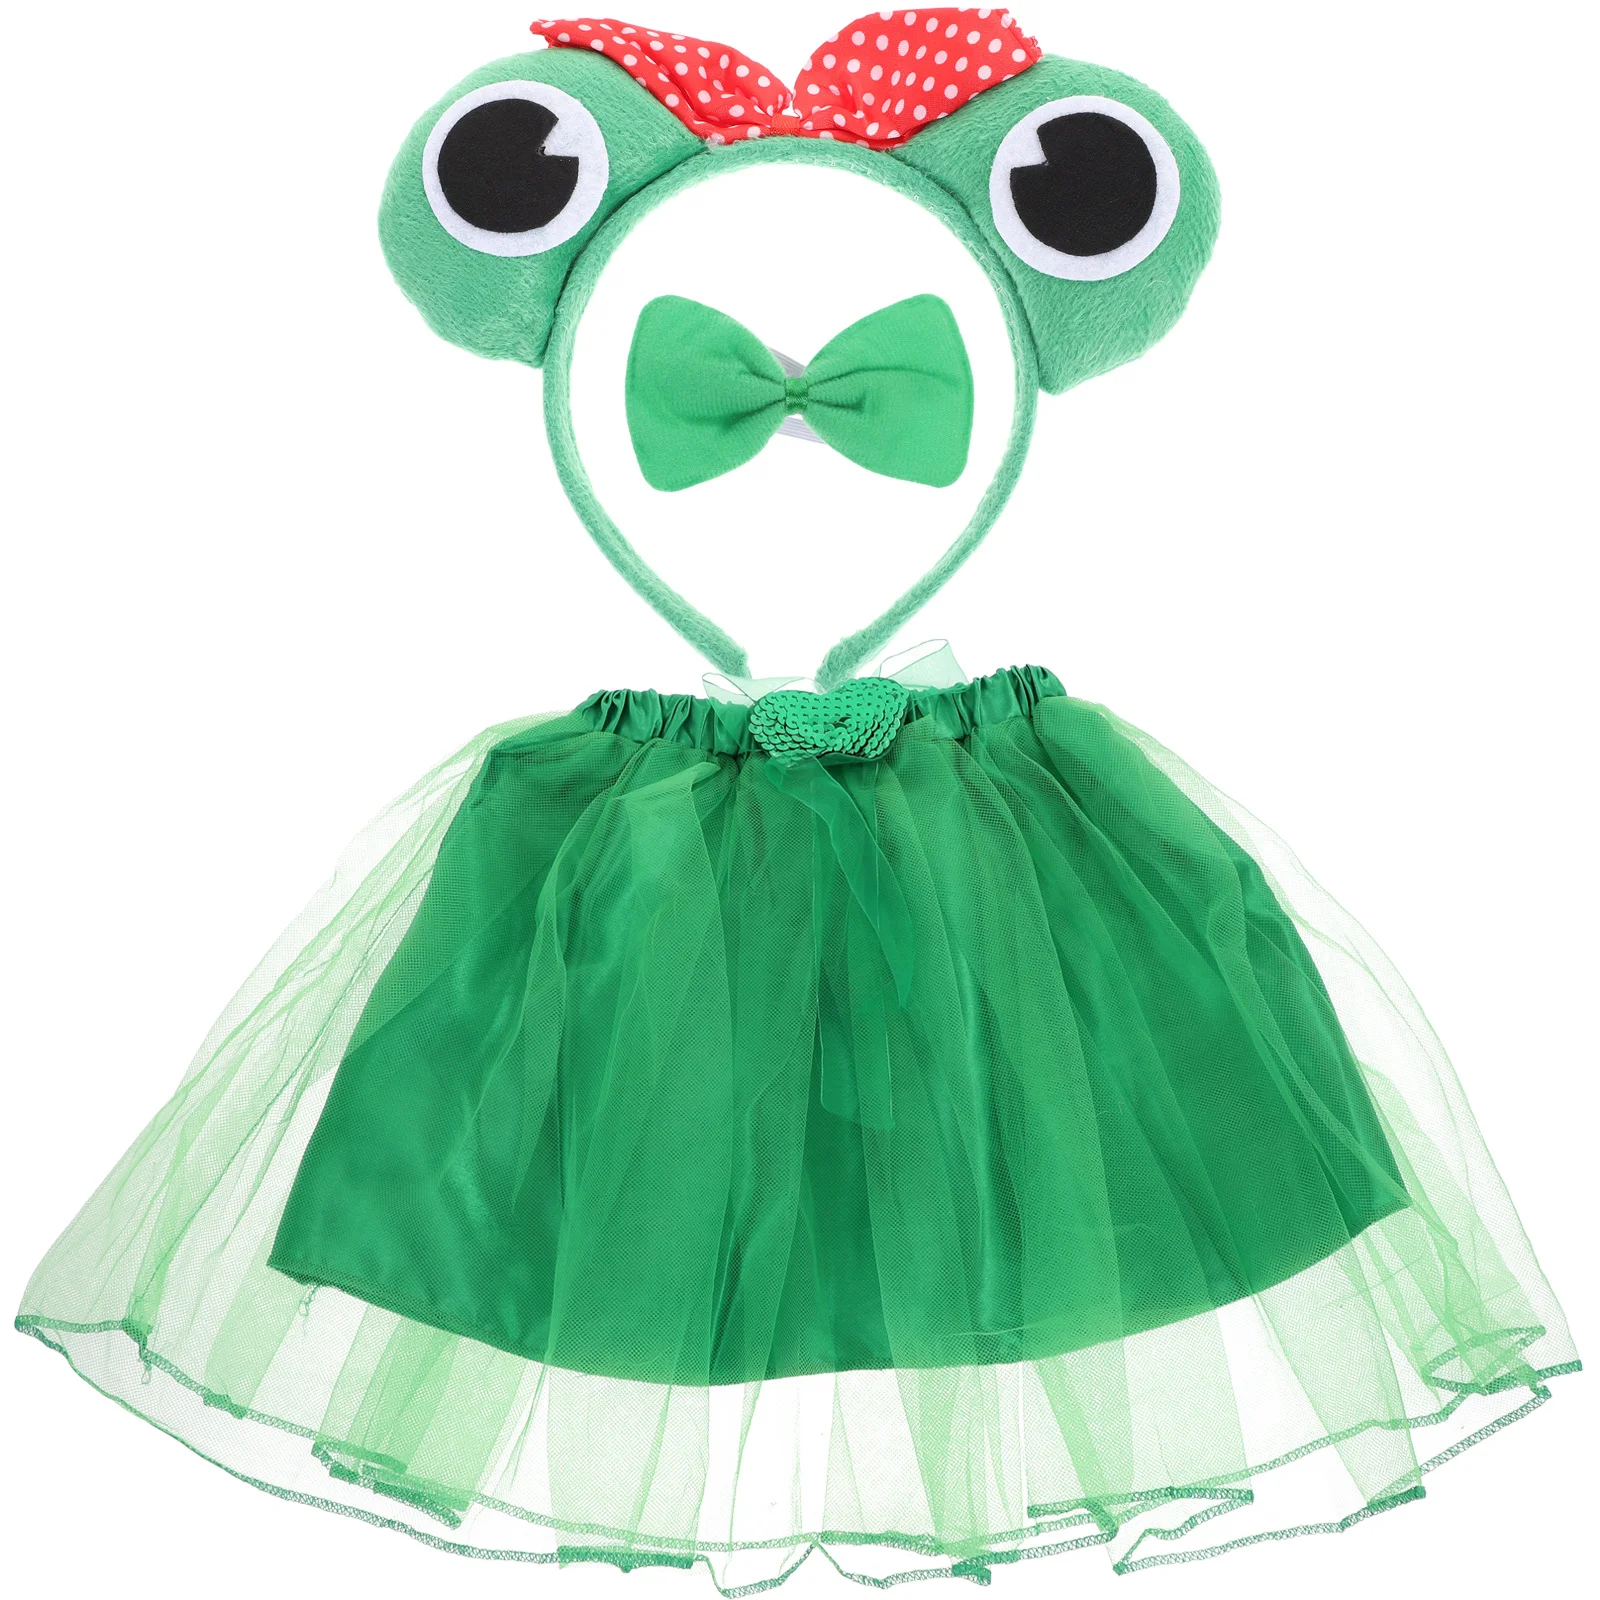 

3PCS Prince Model Costumes Headband Tutu Skirt Set Angle Girls Fairy Dress Outfit(Green)